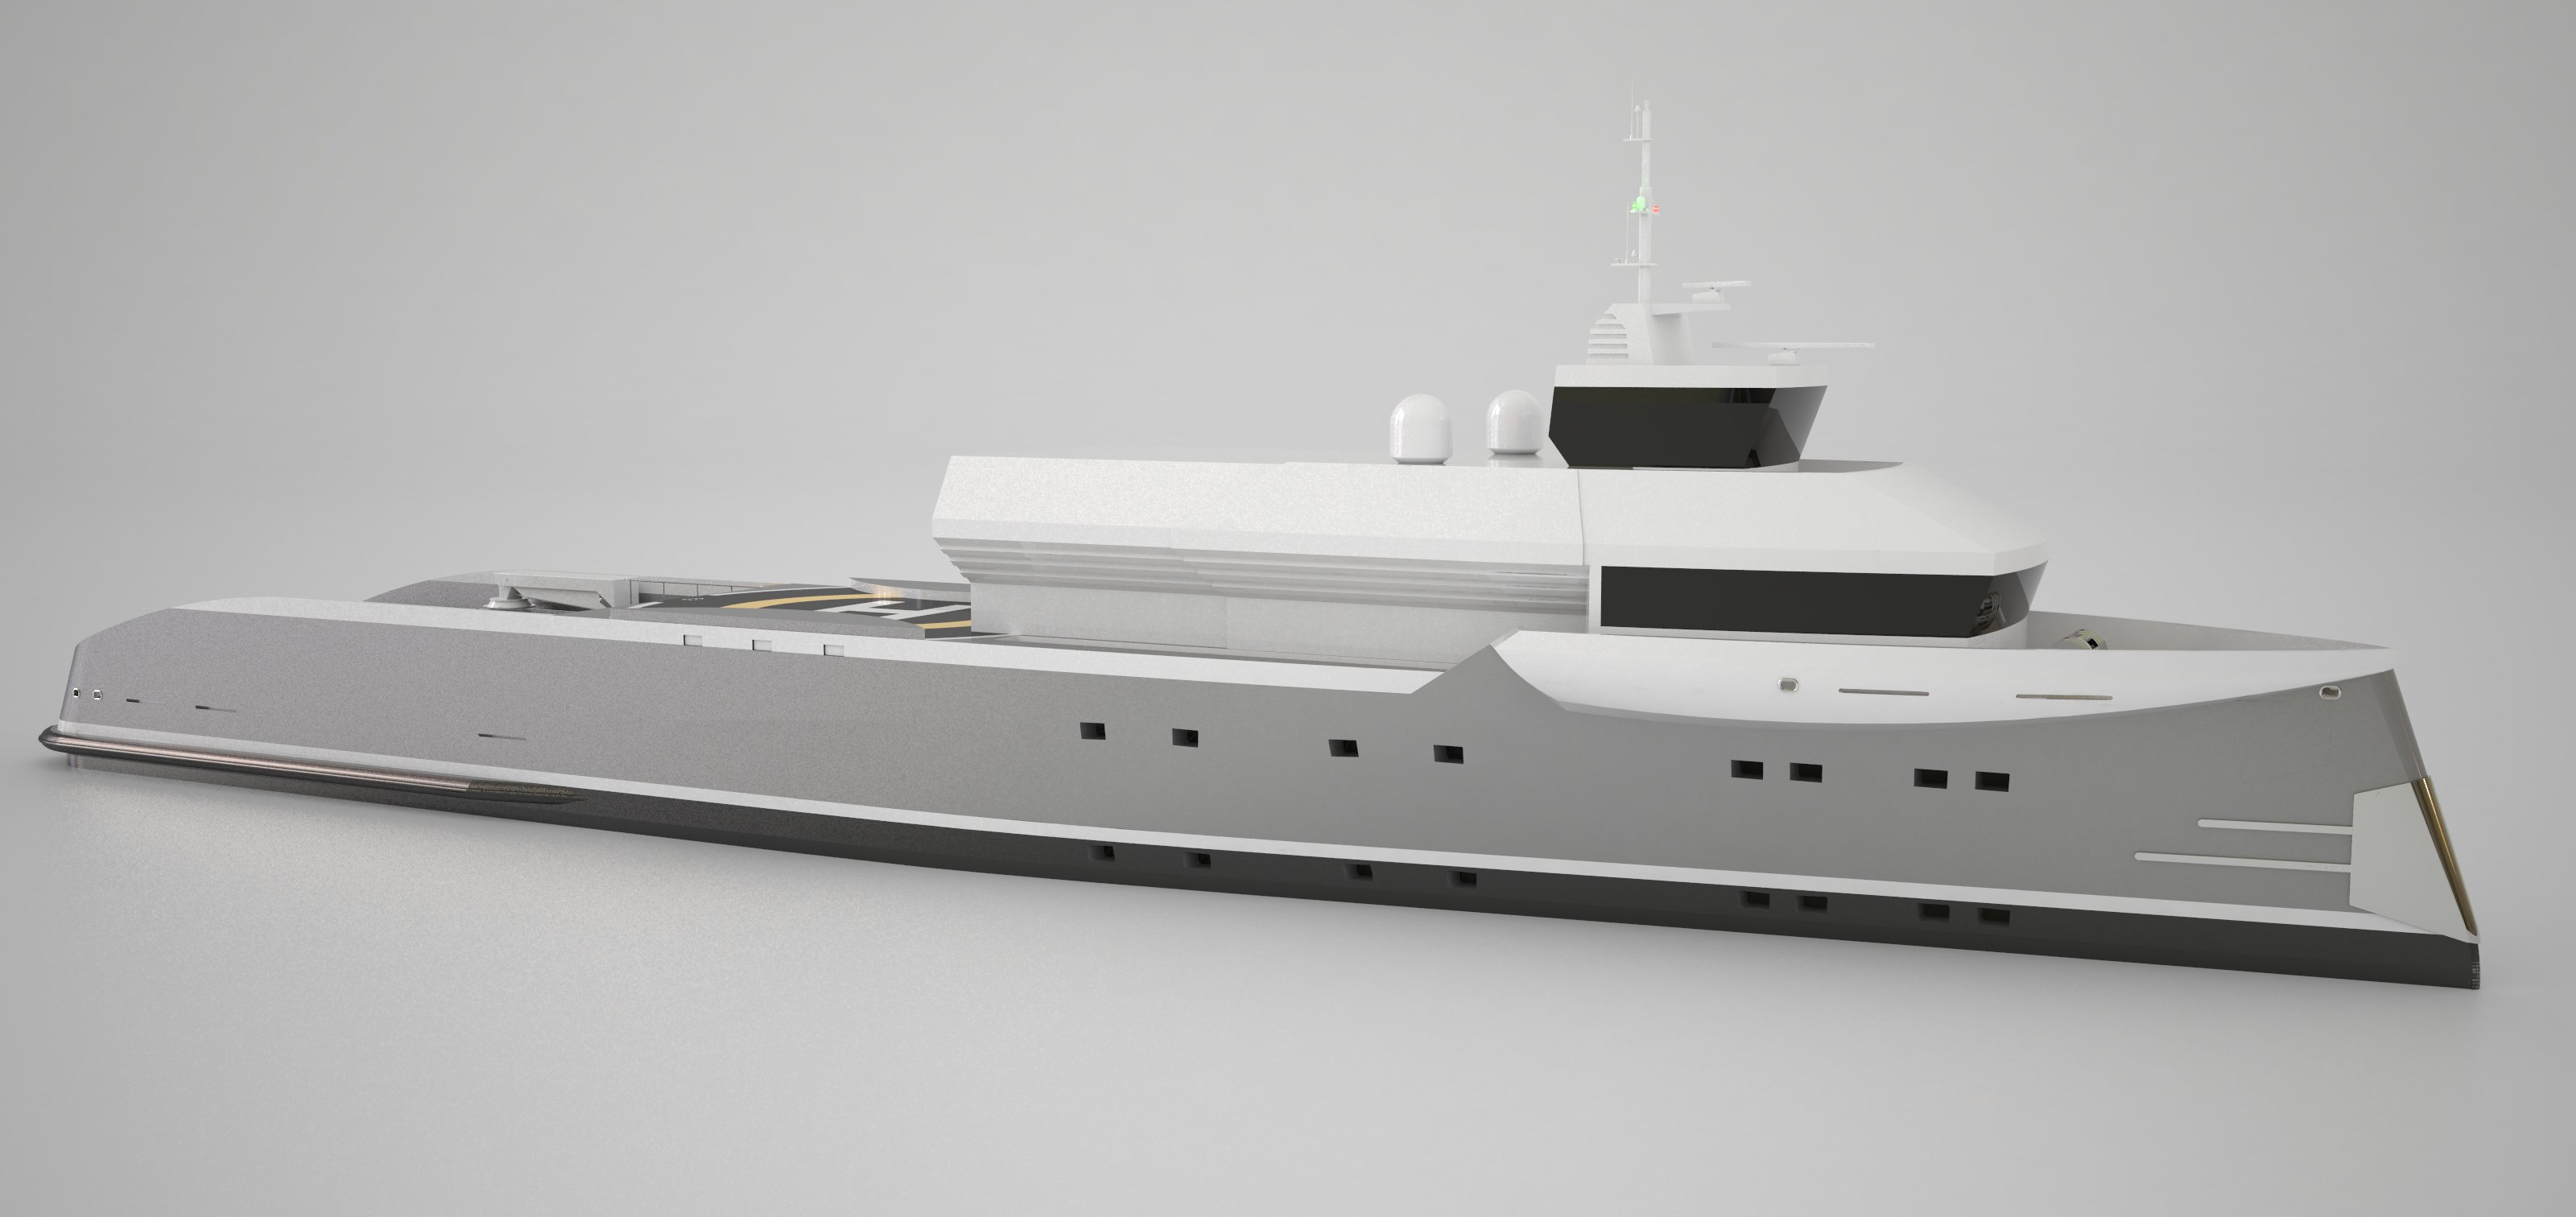 sterling scott yacht design